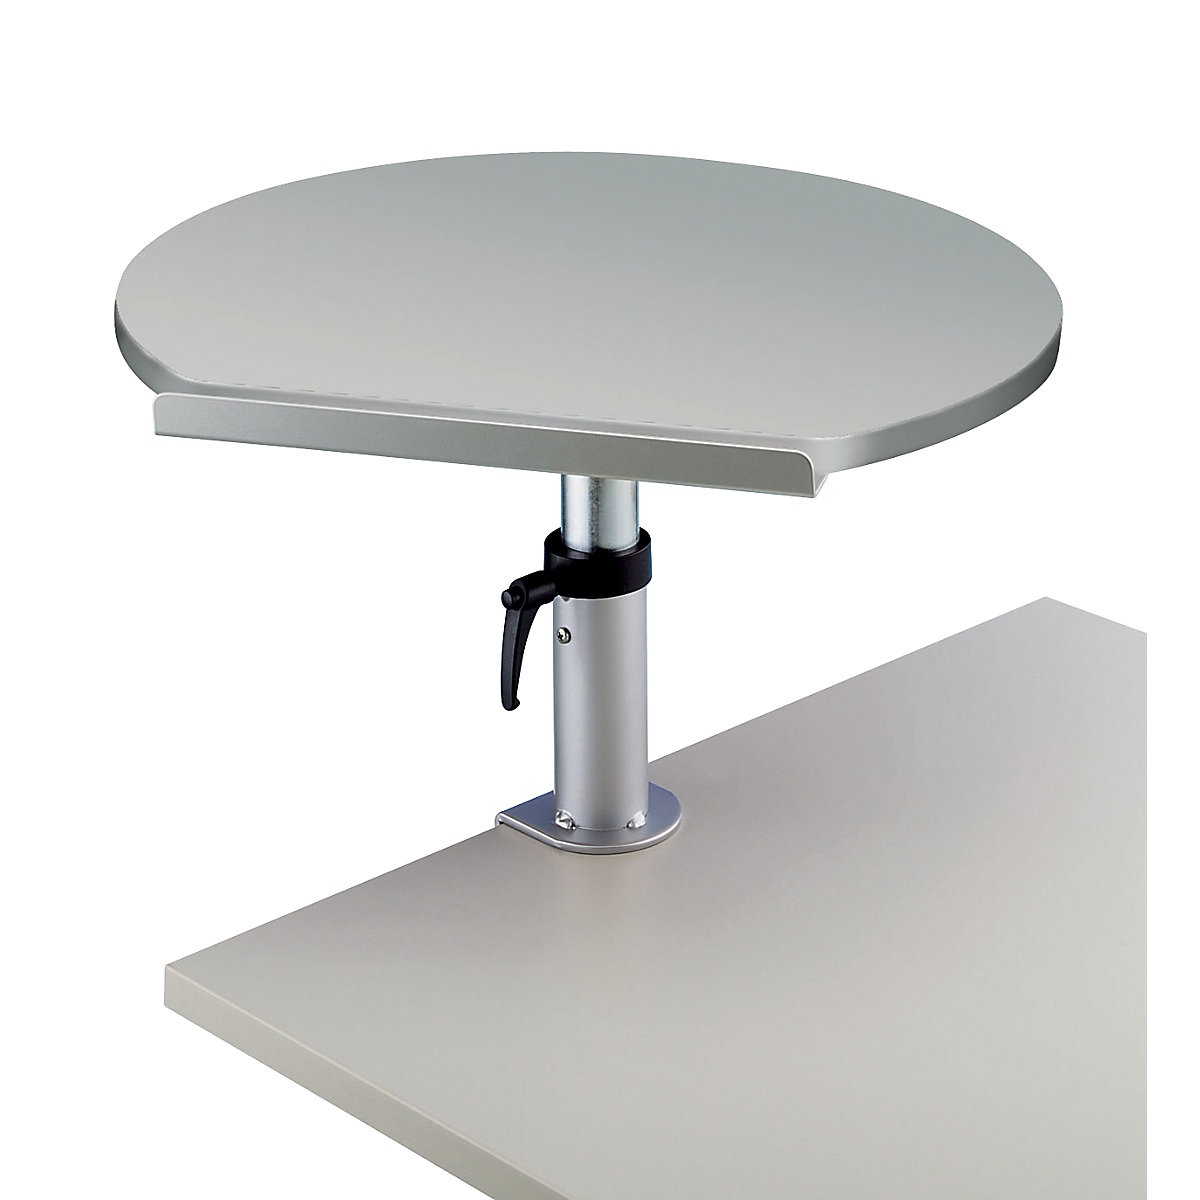 Table pedestal, ergonomic – MAUL, WxD 600 x 520 mm, height adjustable, grey-5